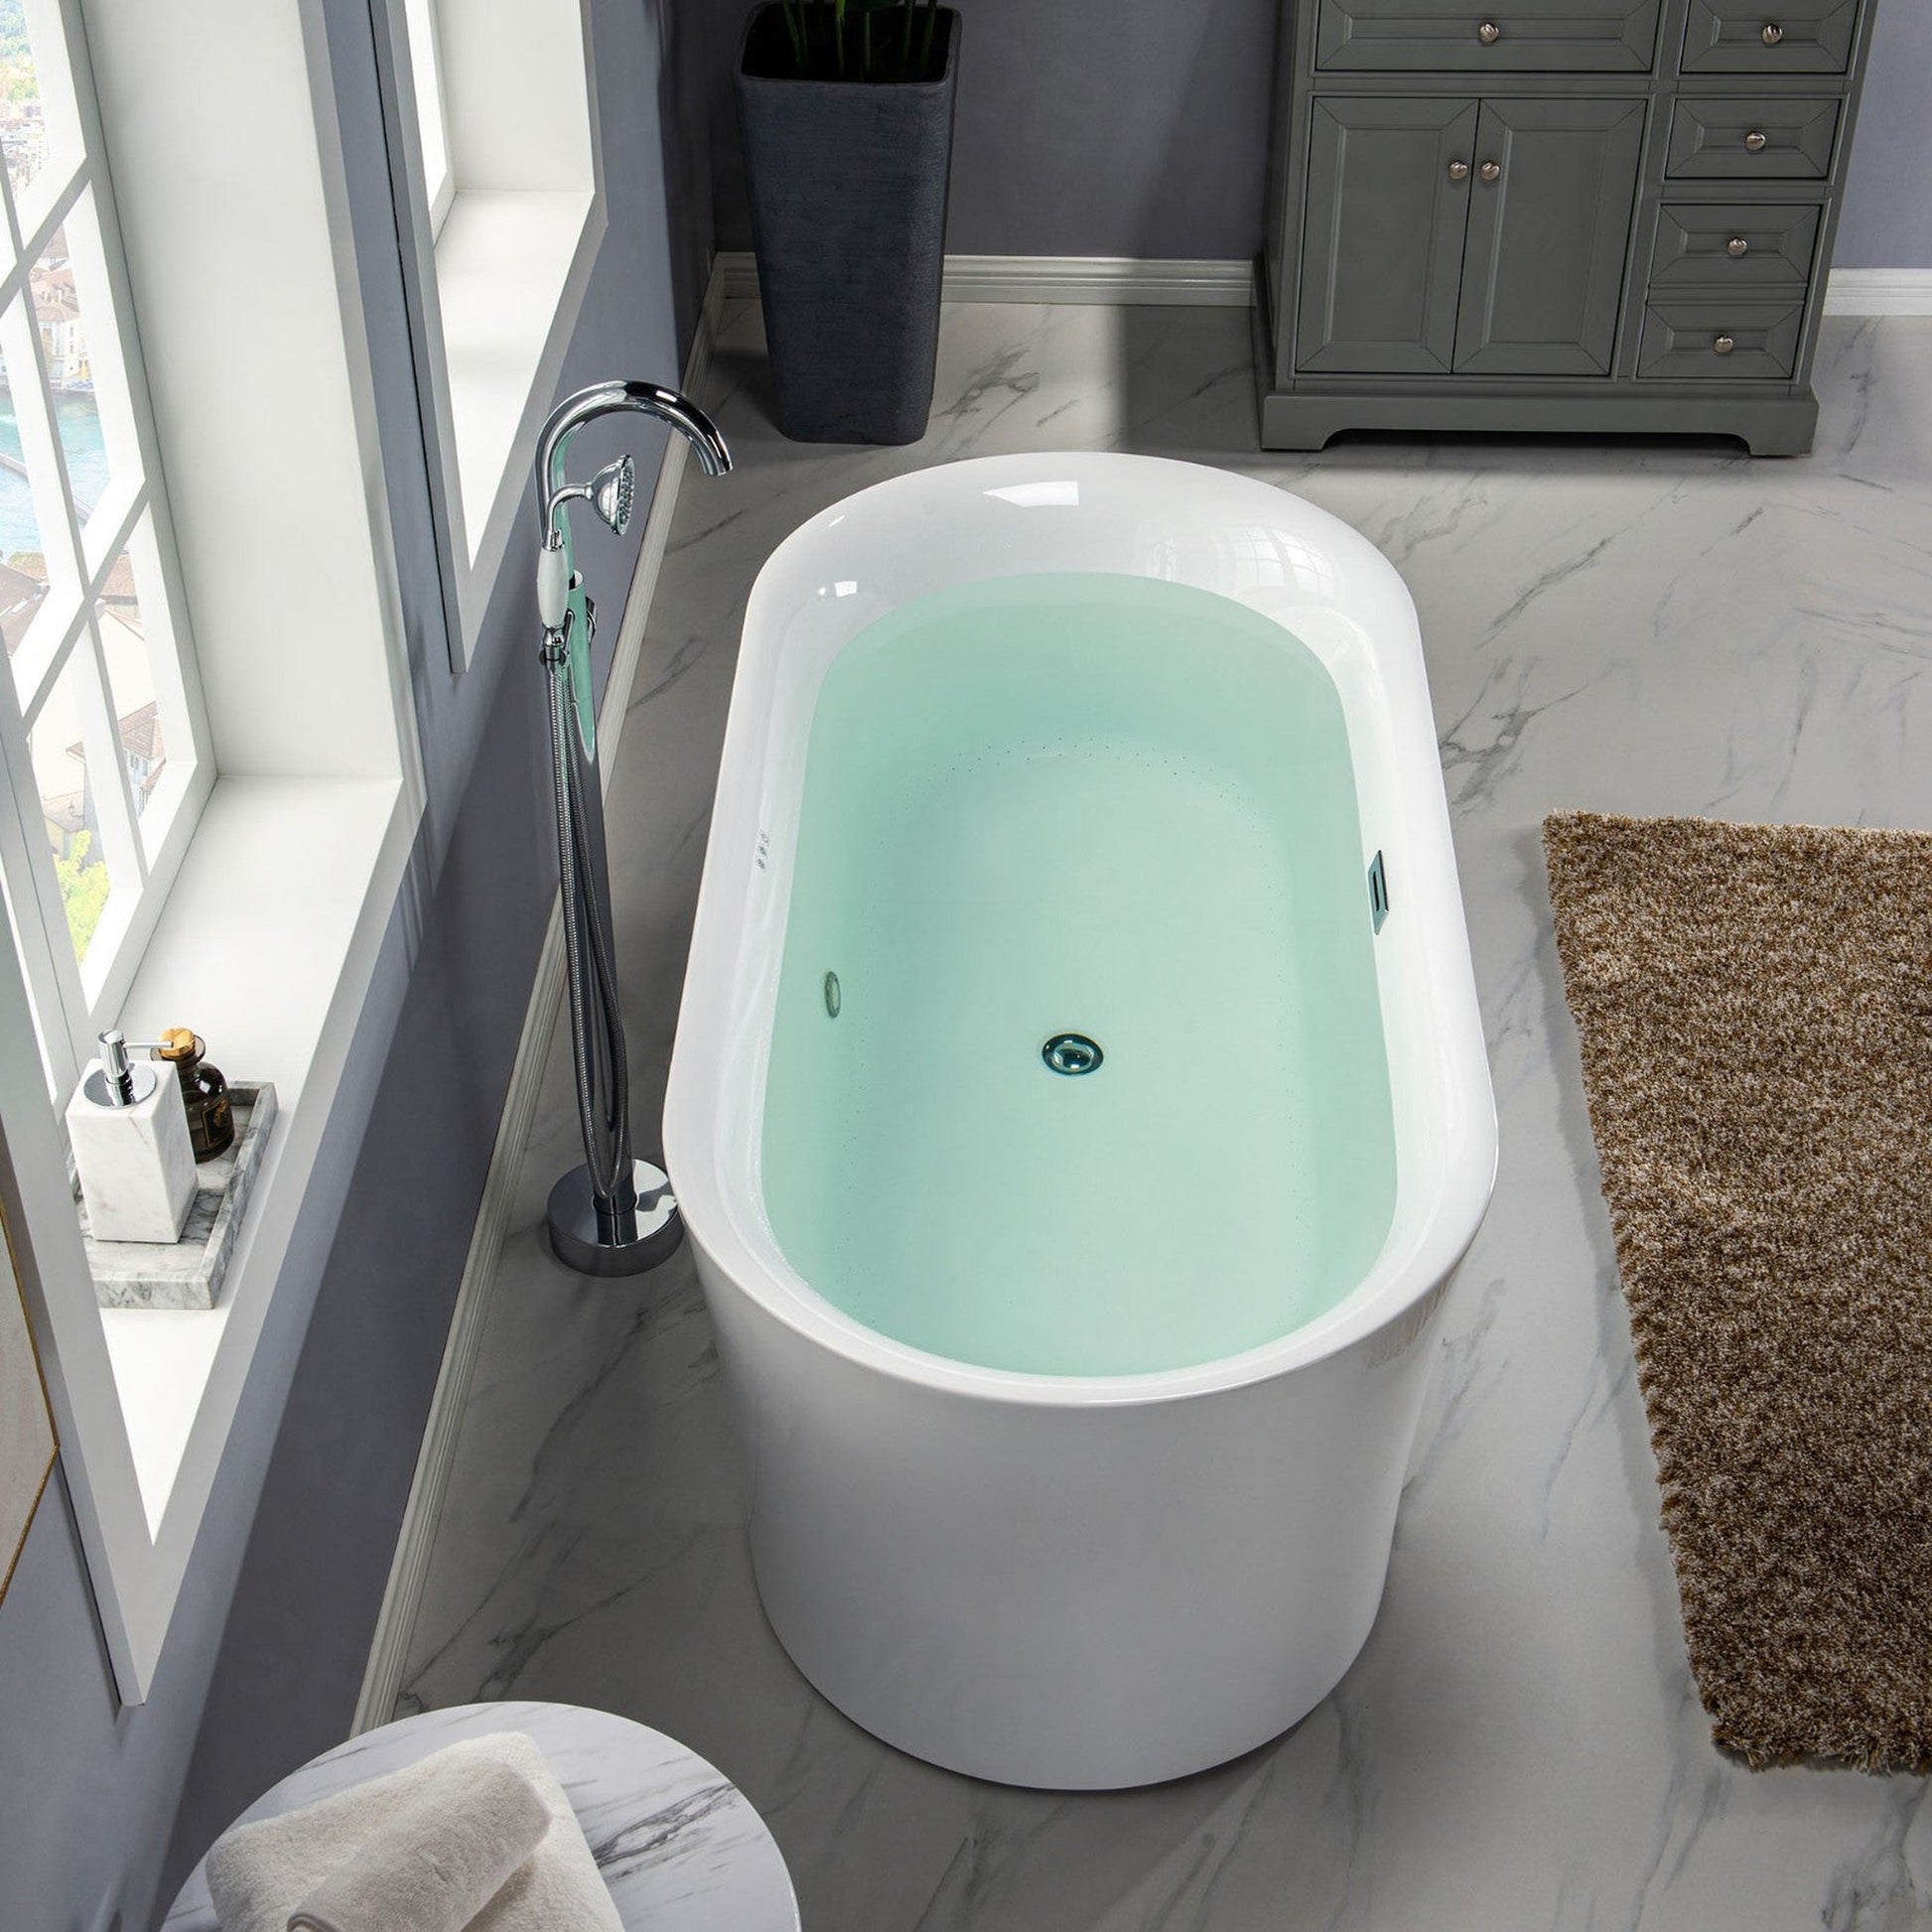 WoodBridge 67" White Acrylic Freestanding Air Bubble Soaking Bathtub With Chrome Overflow and Drain Finish